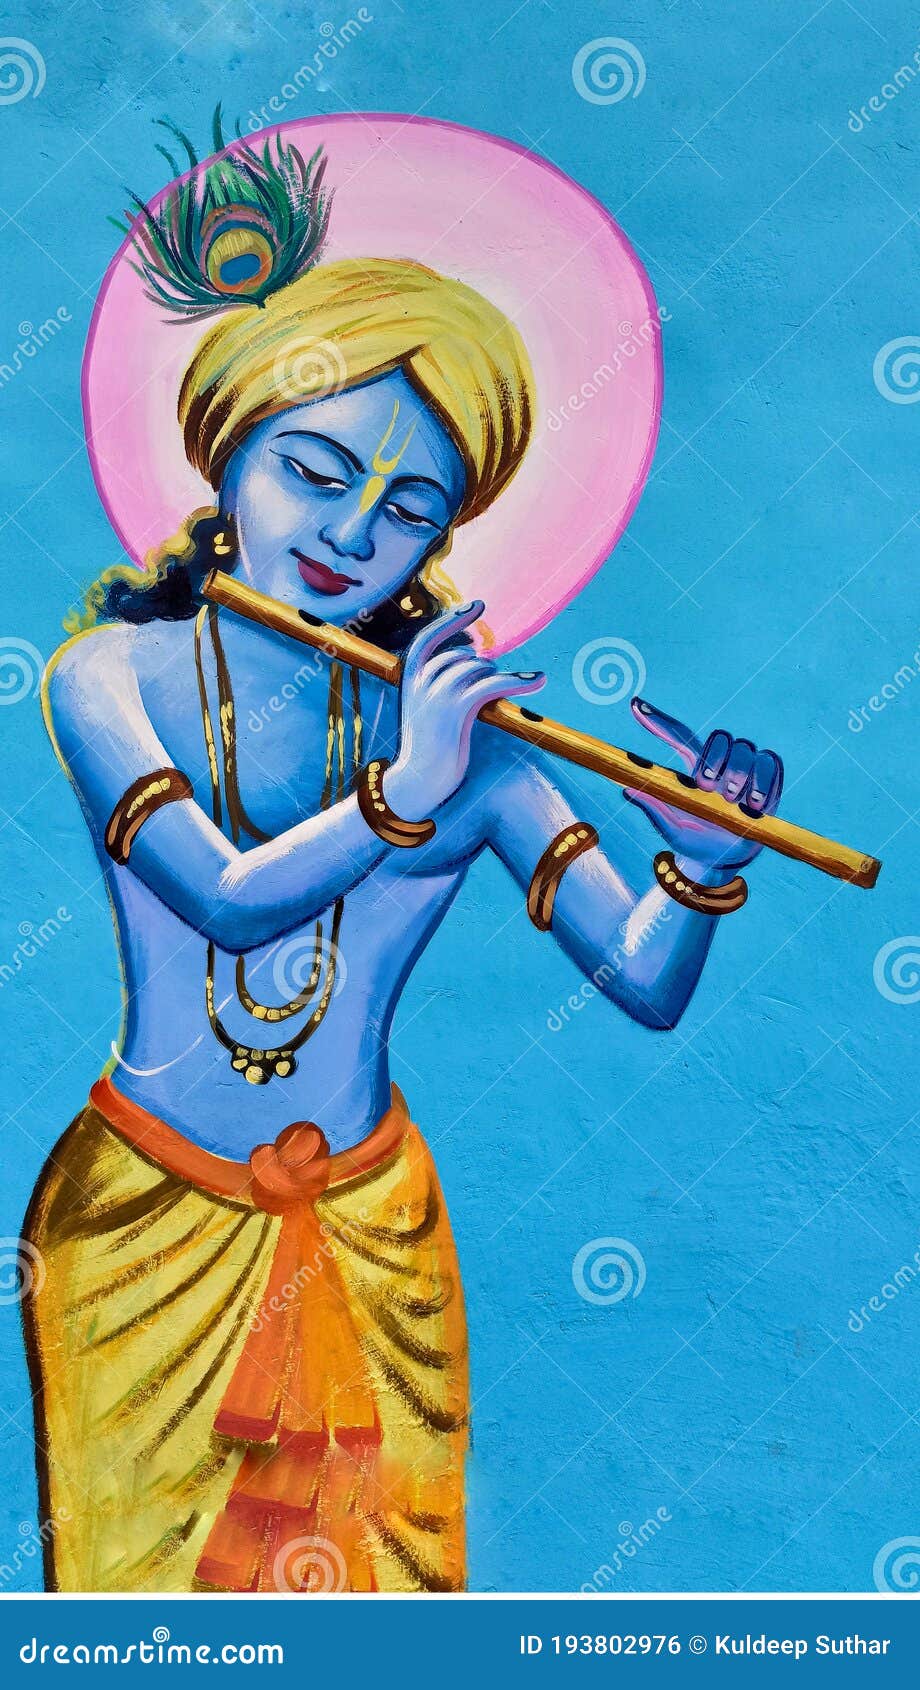 Hindu Lord Krishna Playing the Flute Painting Stock Photo - Image ...